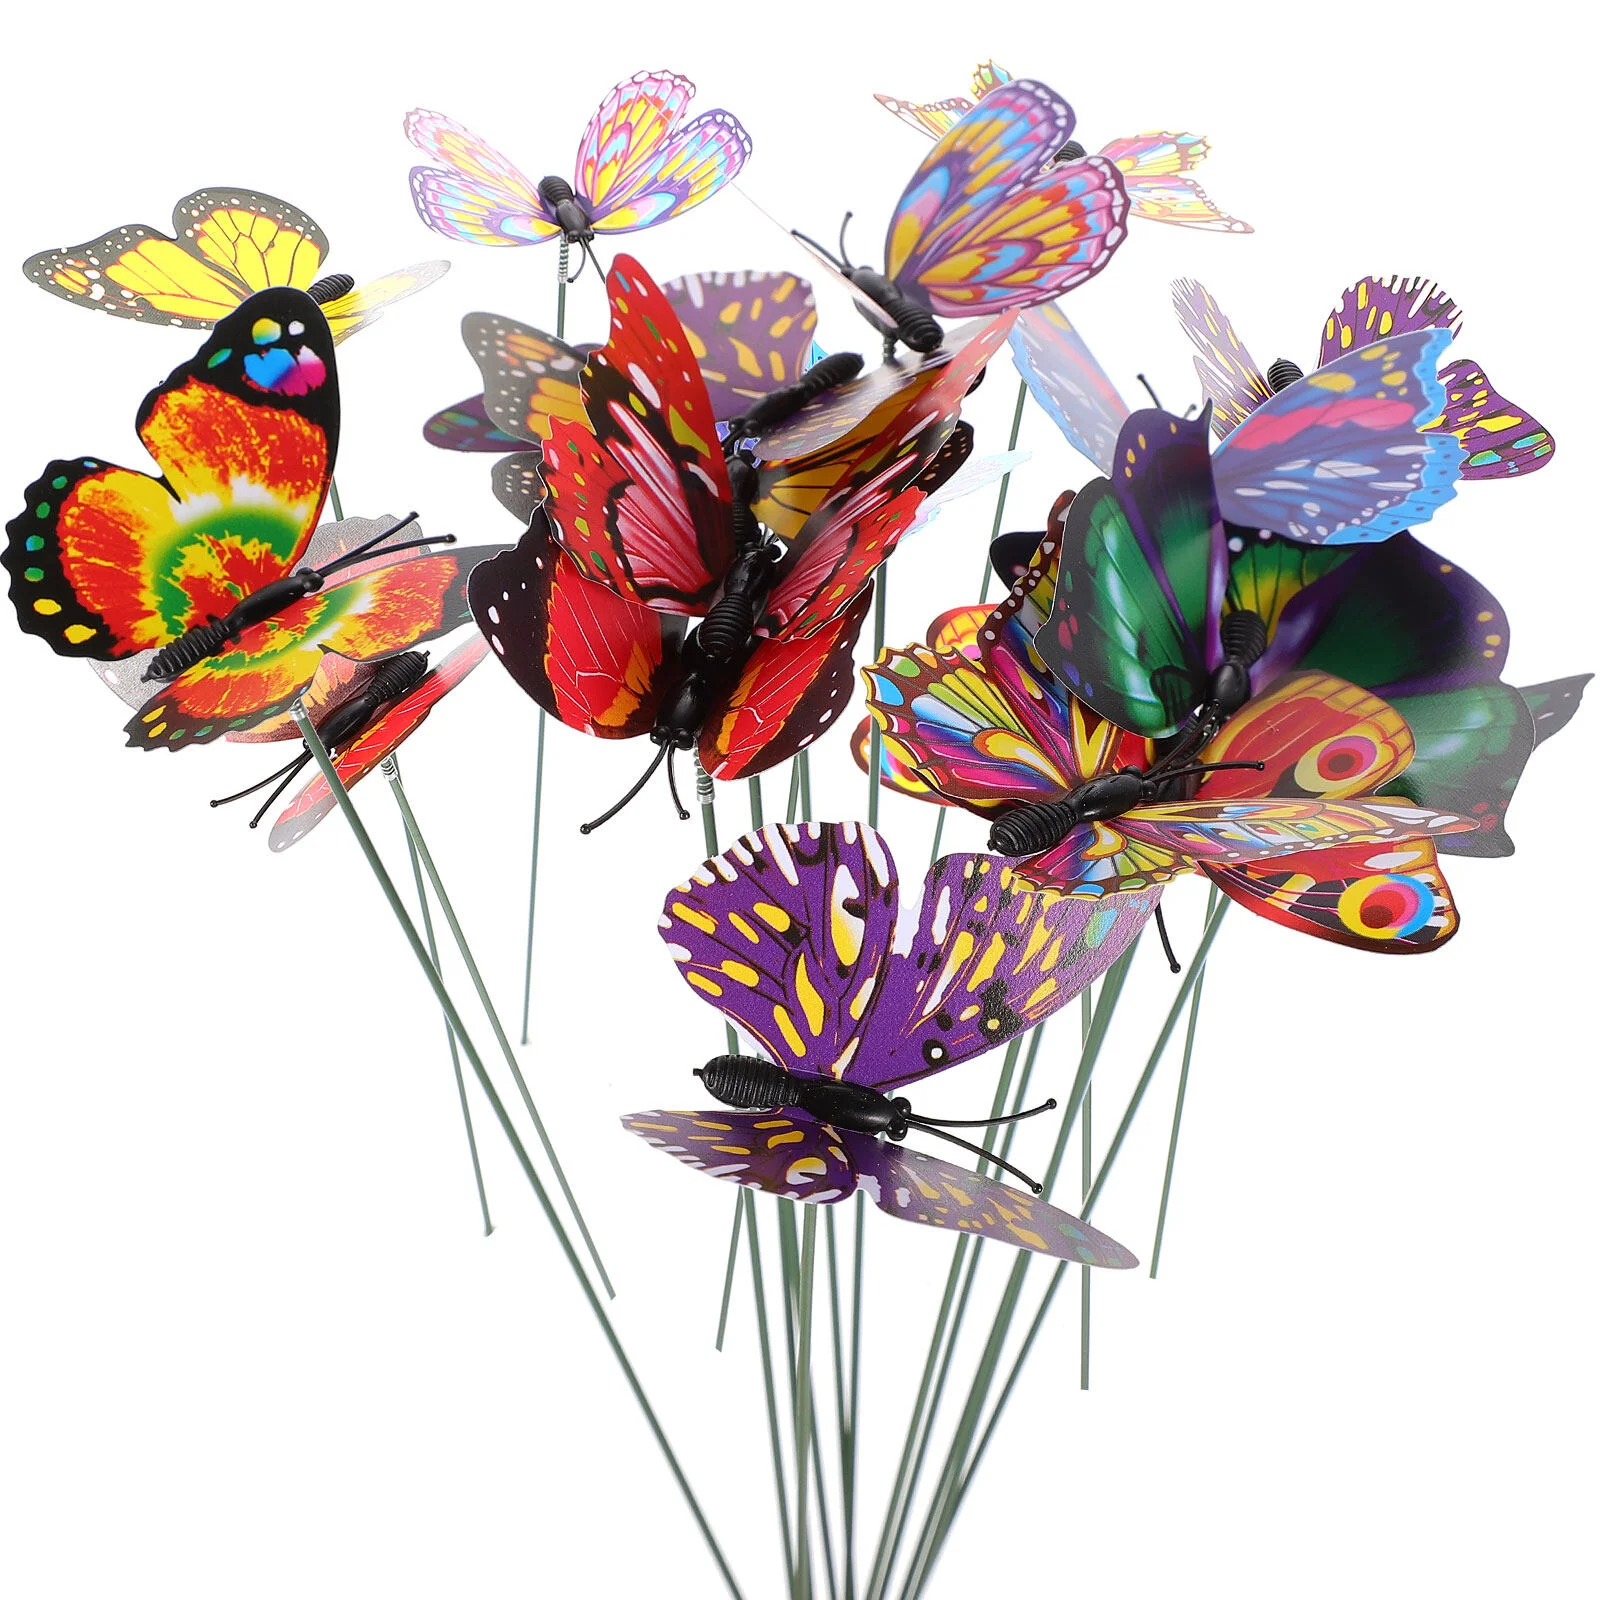 

50 Pcs Artificial Butterfly Cuttings Outdoor Decoration Simulation Butterflies Stake Flower Bed Yard Decorative butterflies